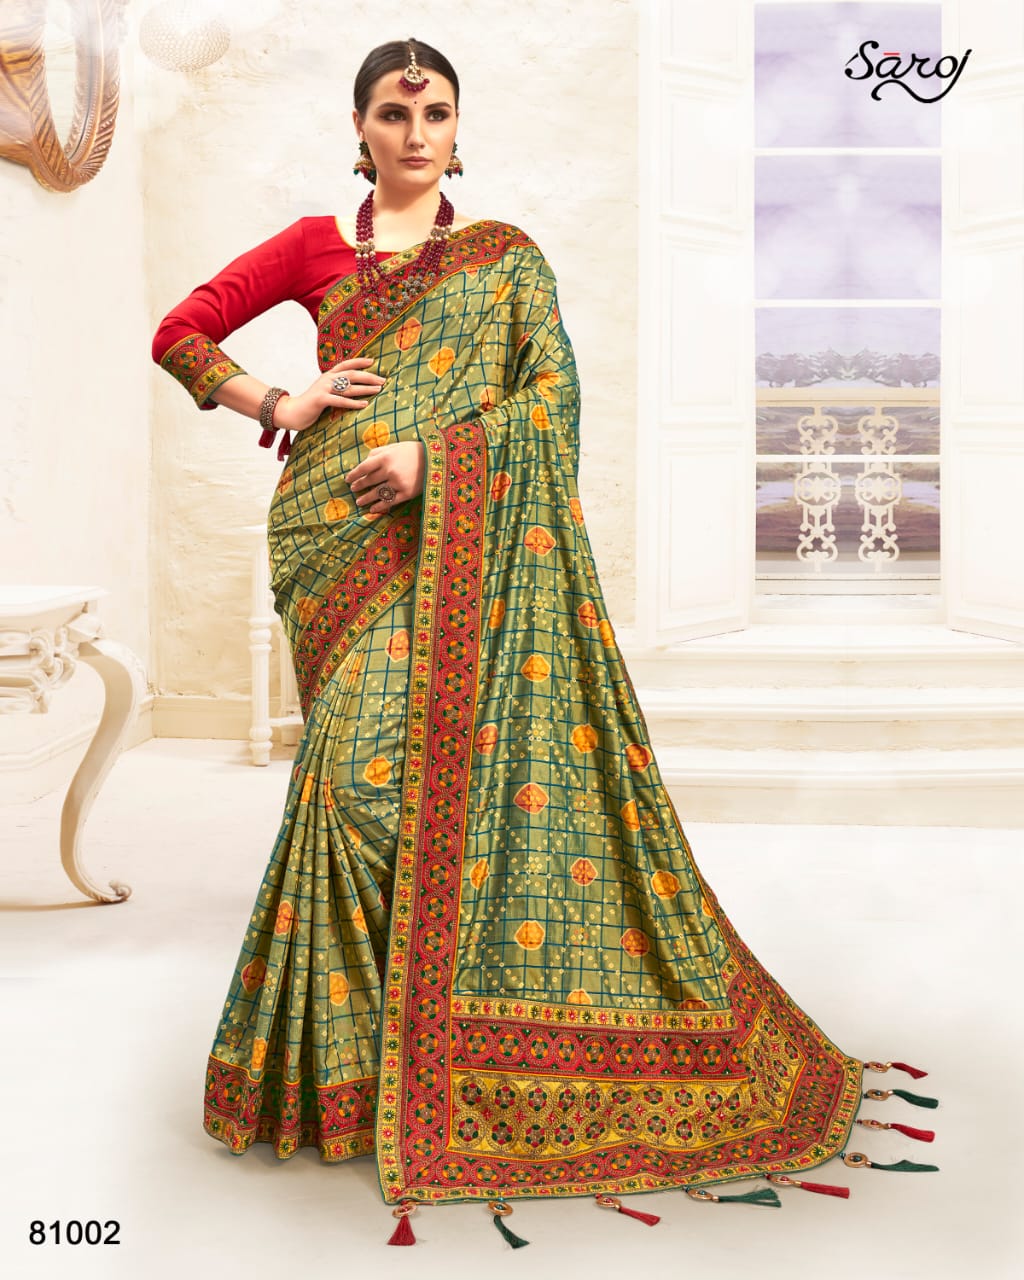 Saroj panihari astonishing style beautifully designed Sarees in factory rates